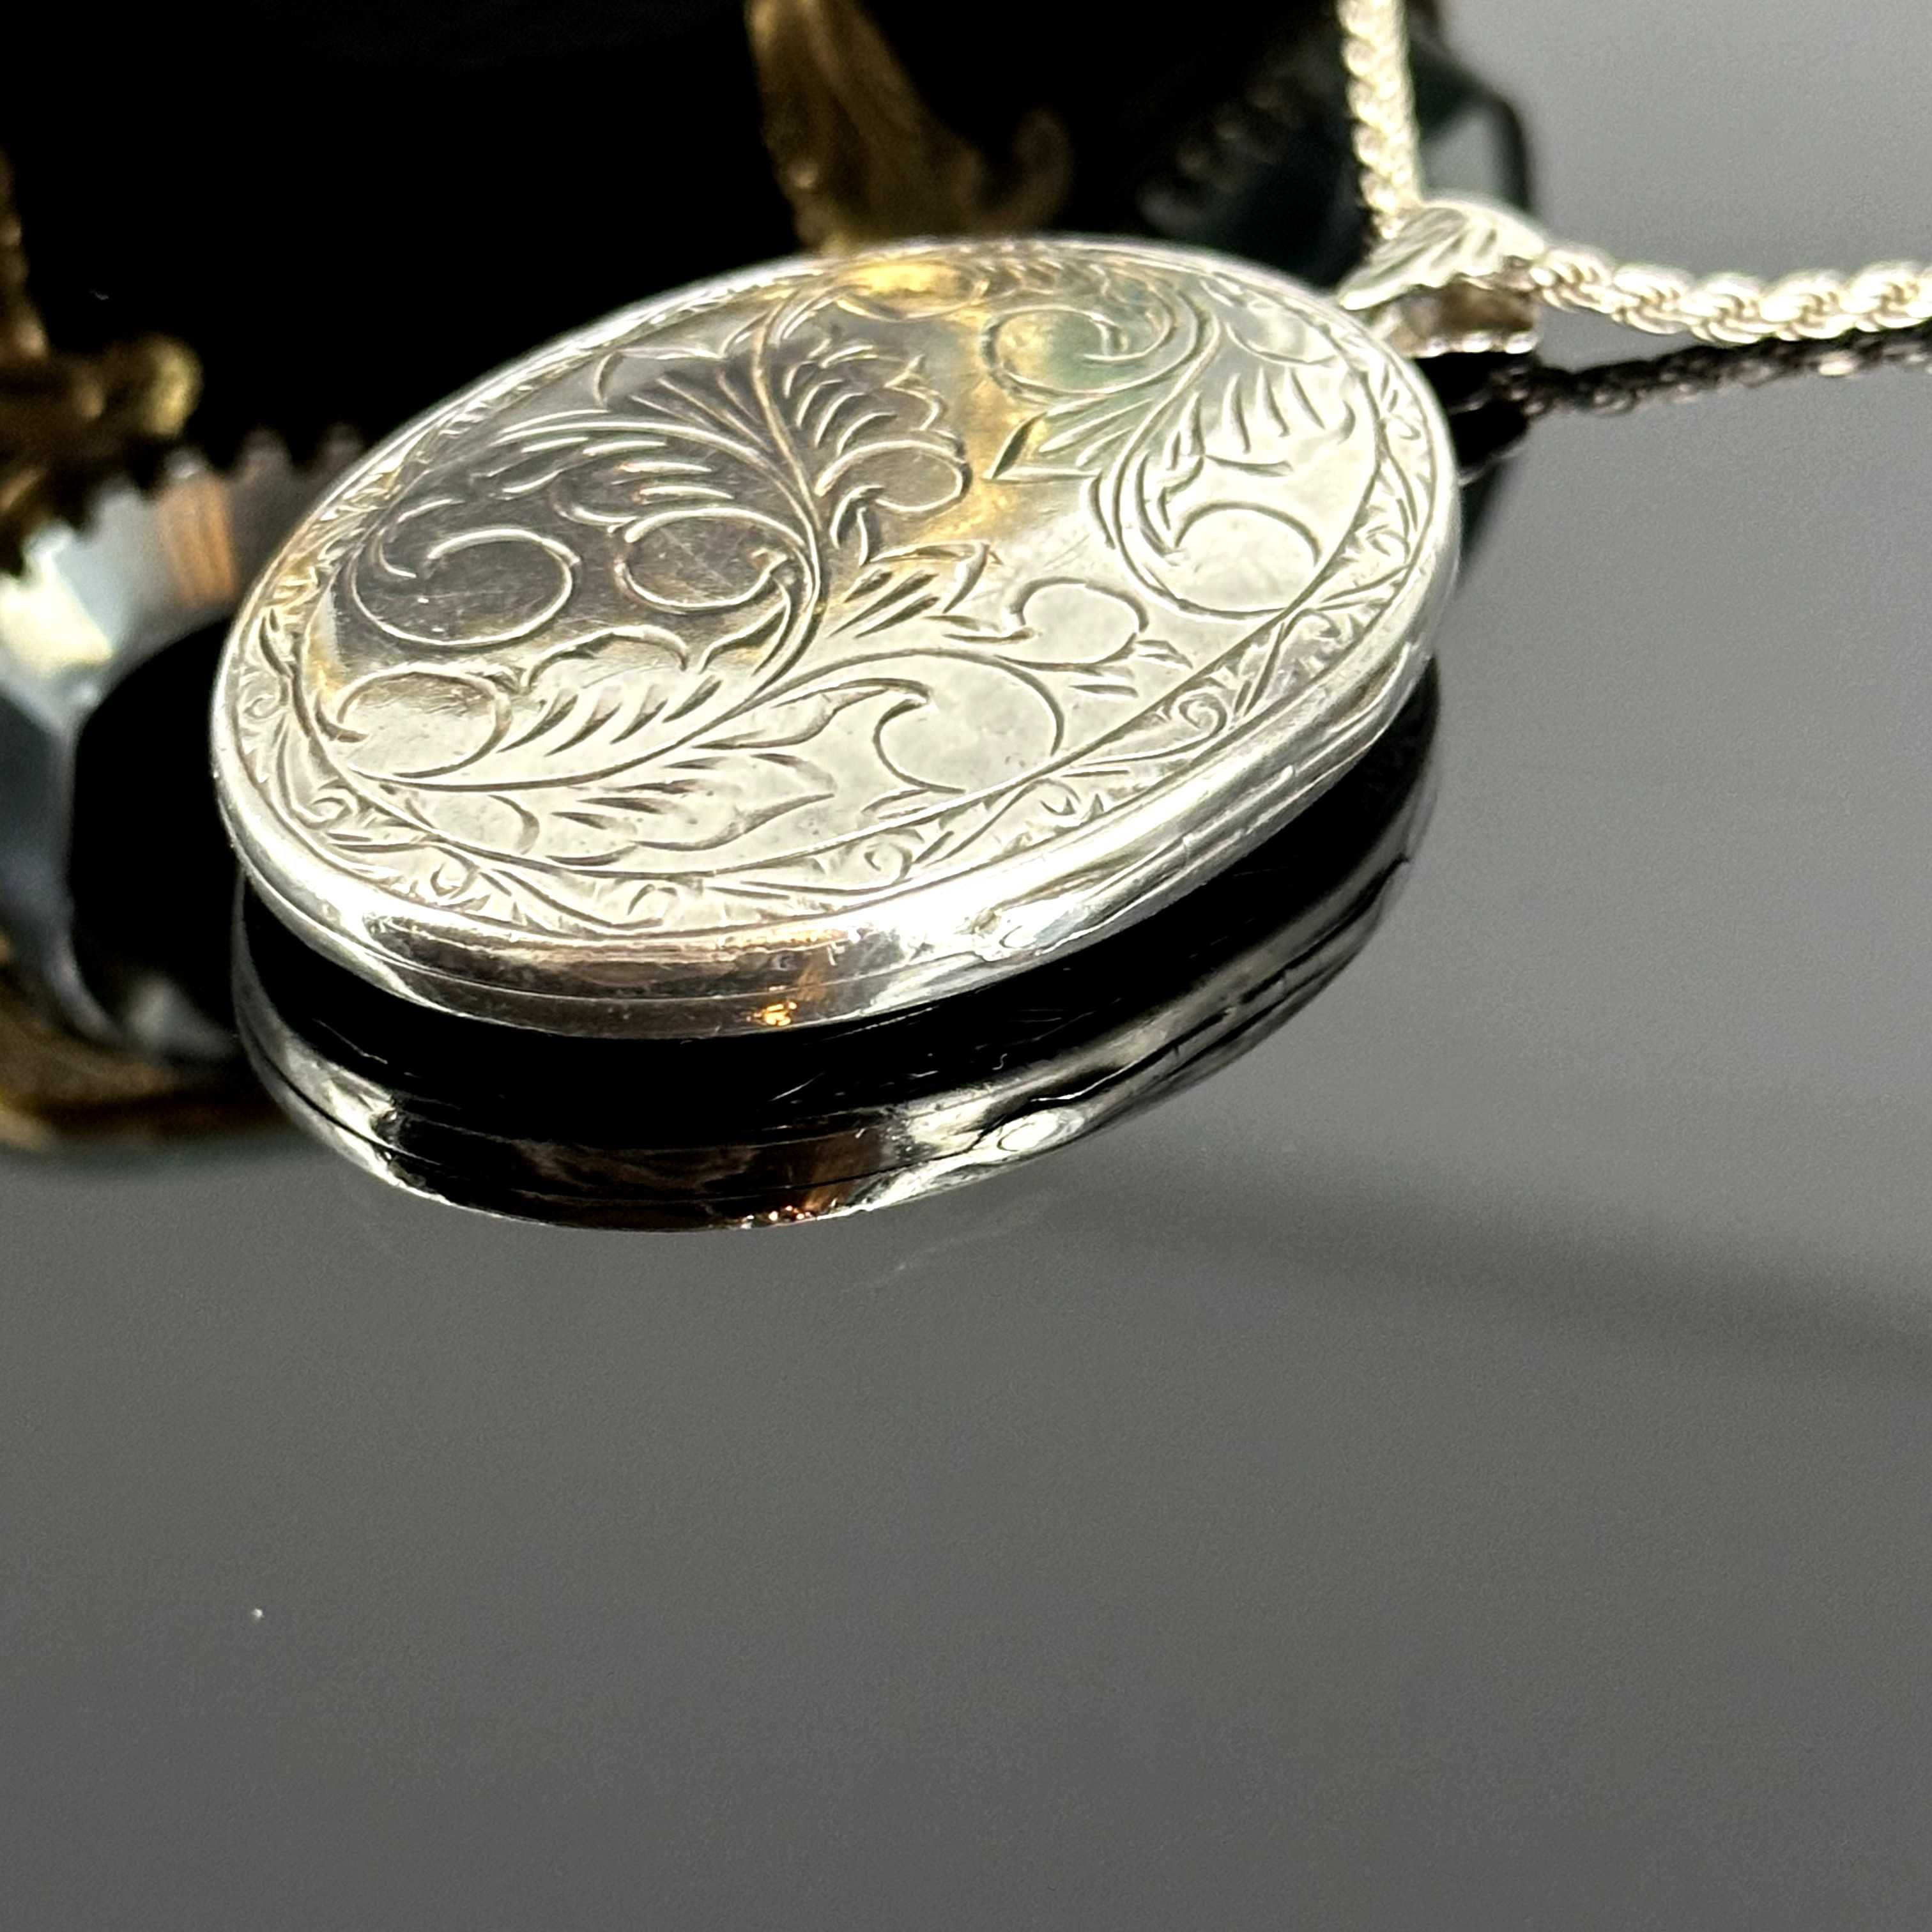 Srebro - Srebrny wielki szkaplerzyk - próba srebra 925